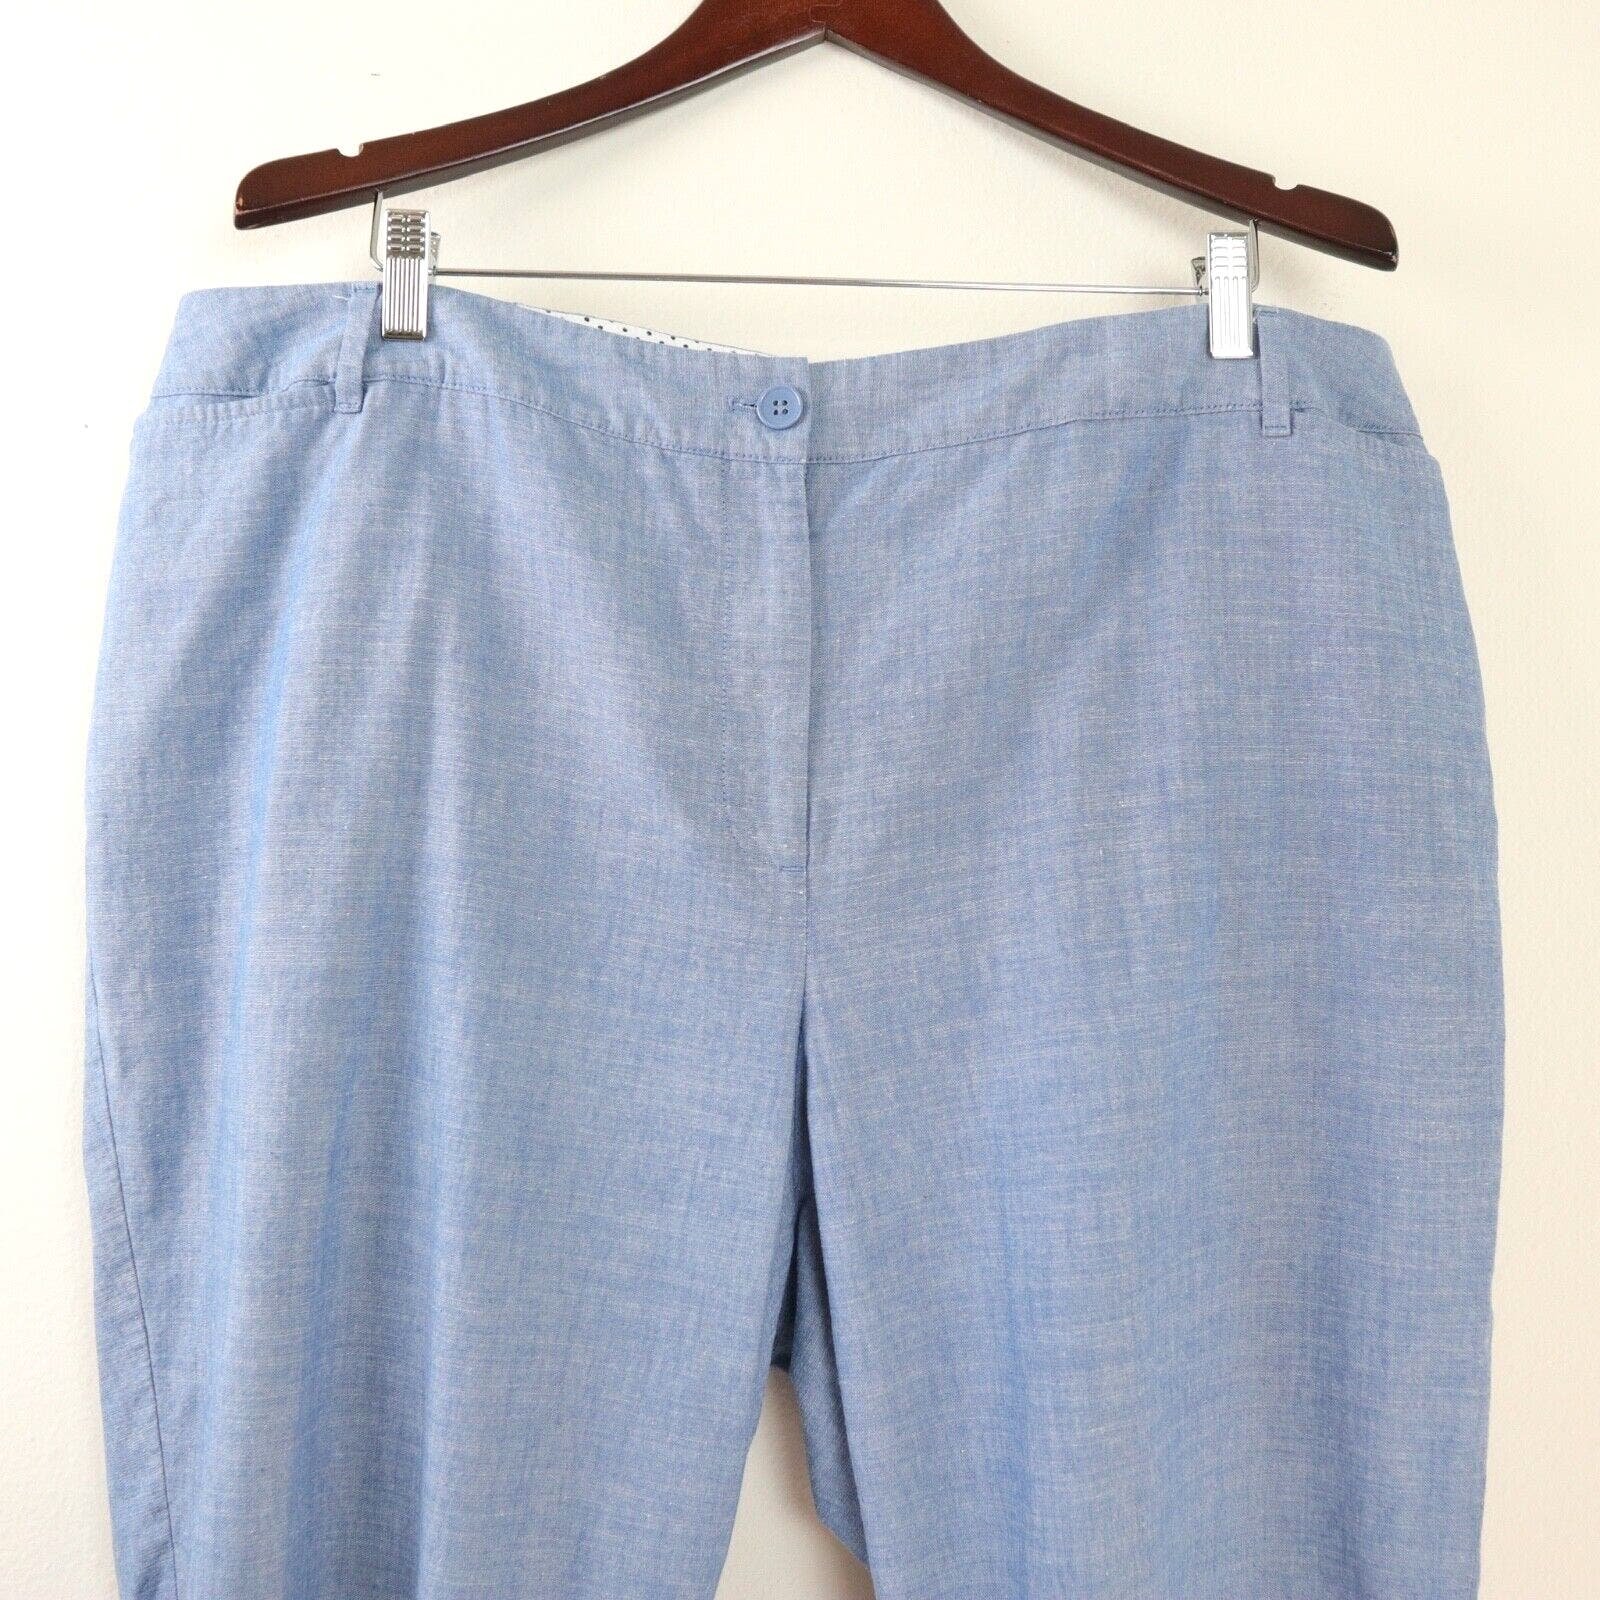 Discounted Talbots Size 20 Perfect Cropped Pants 100% Cotton Chambray Blue Button Hem Lx6JZlj8W Cheap